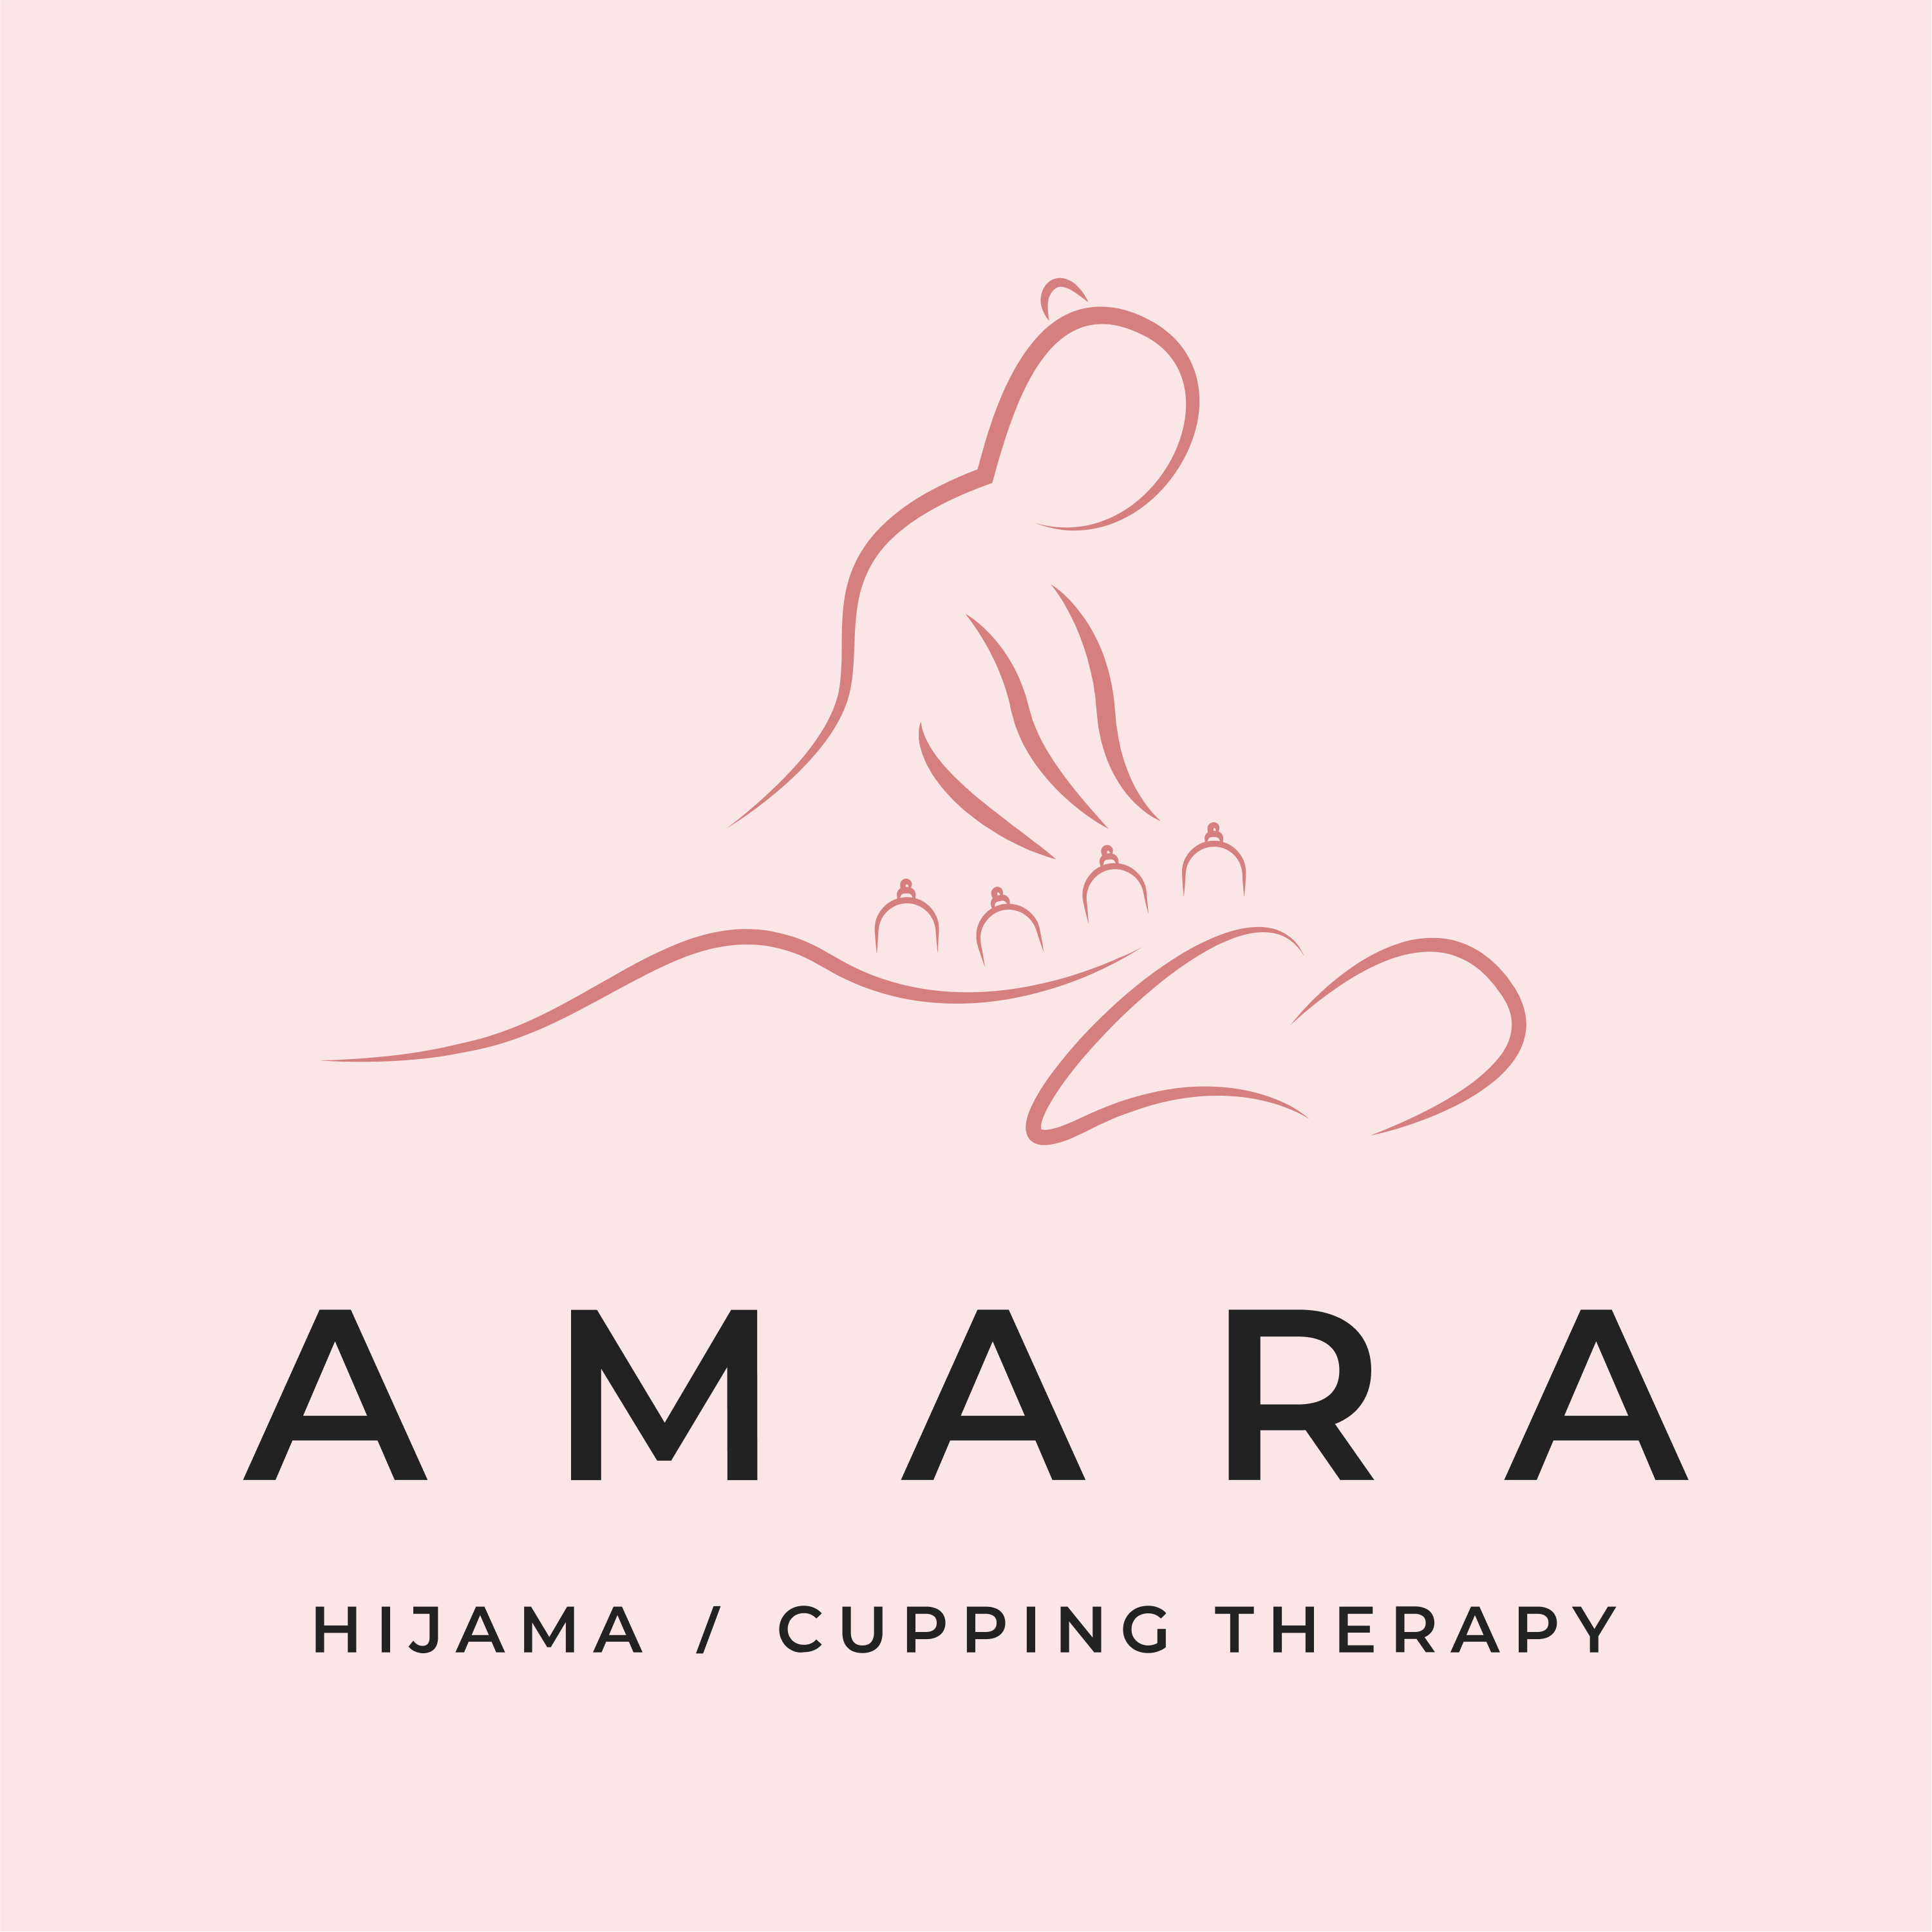 Amara Hijama / Cupping Therapy Mangalore - Logo